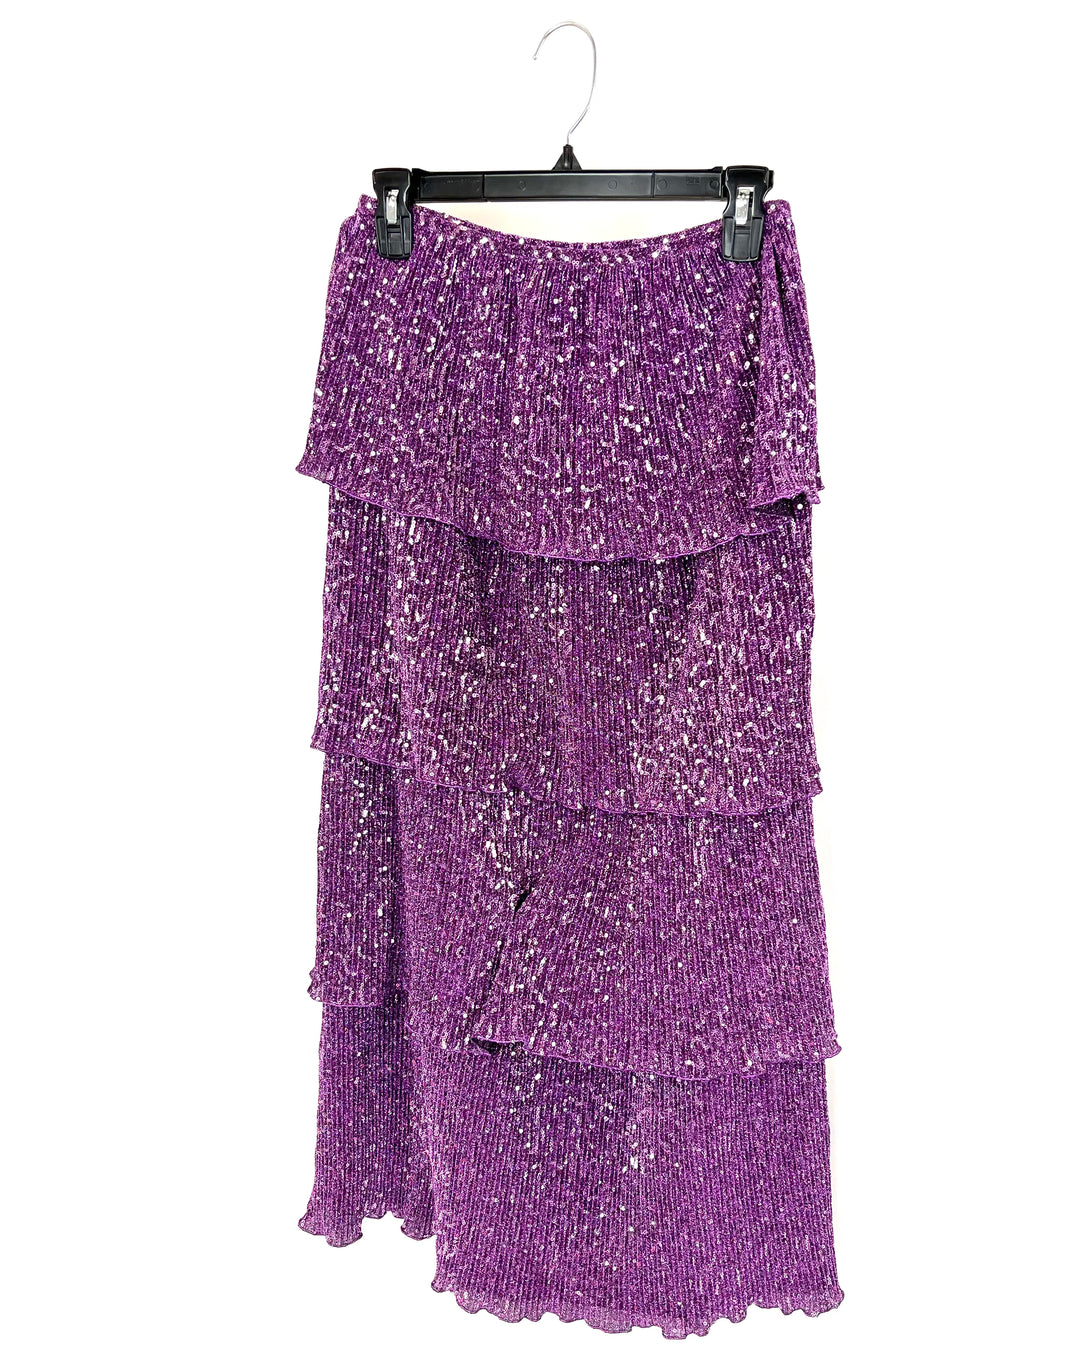 Purple Sequin Skirt - Small